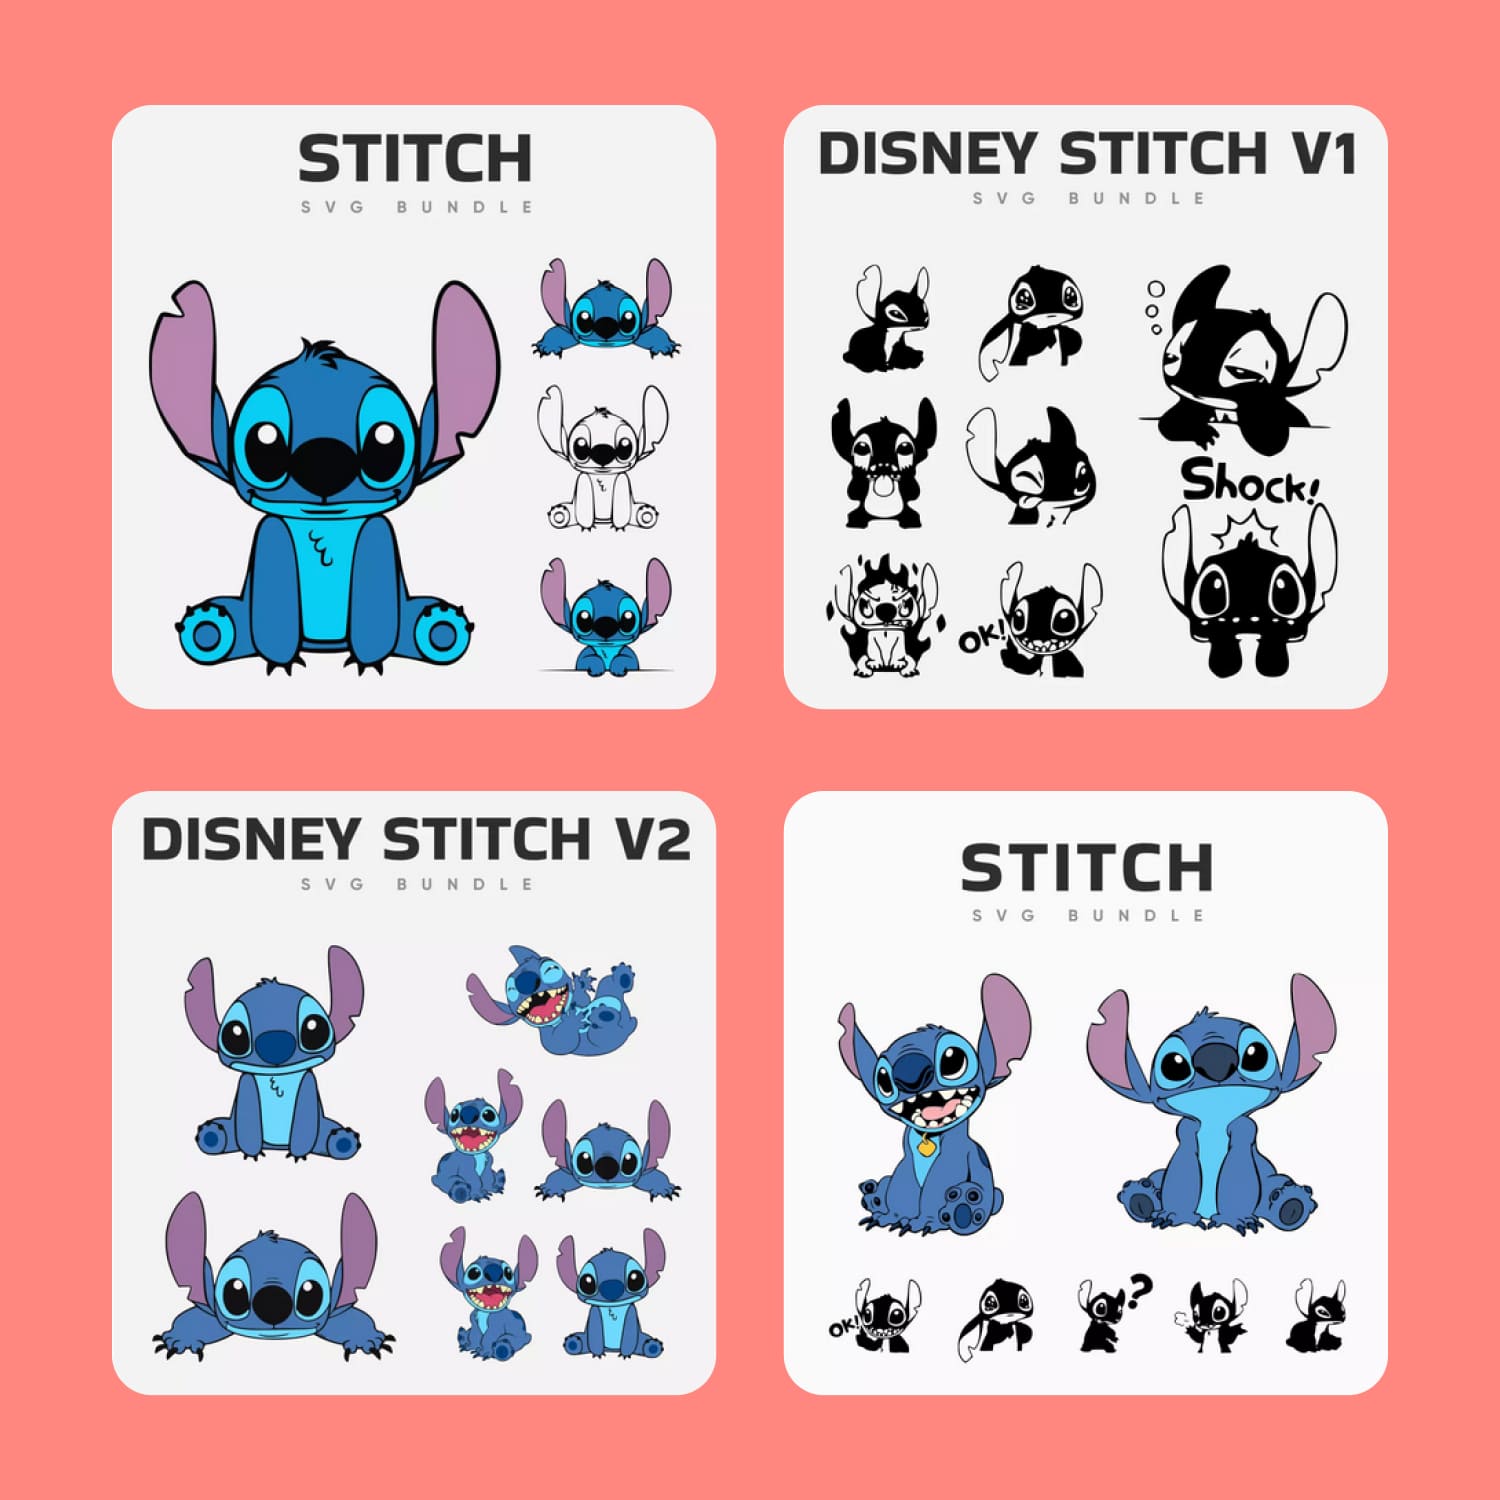 Stitch SVG Files 2.